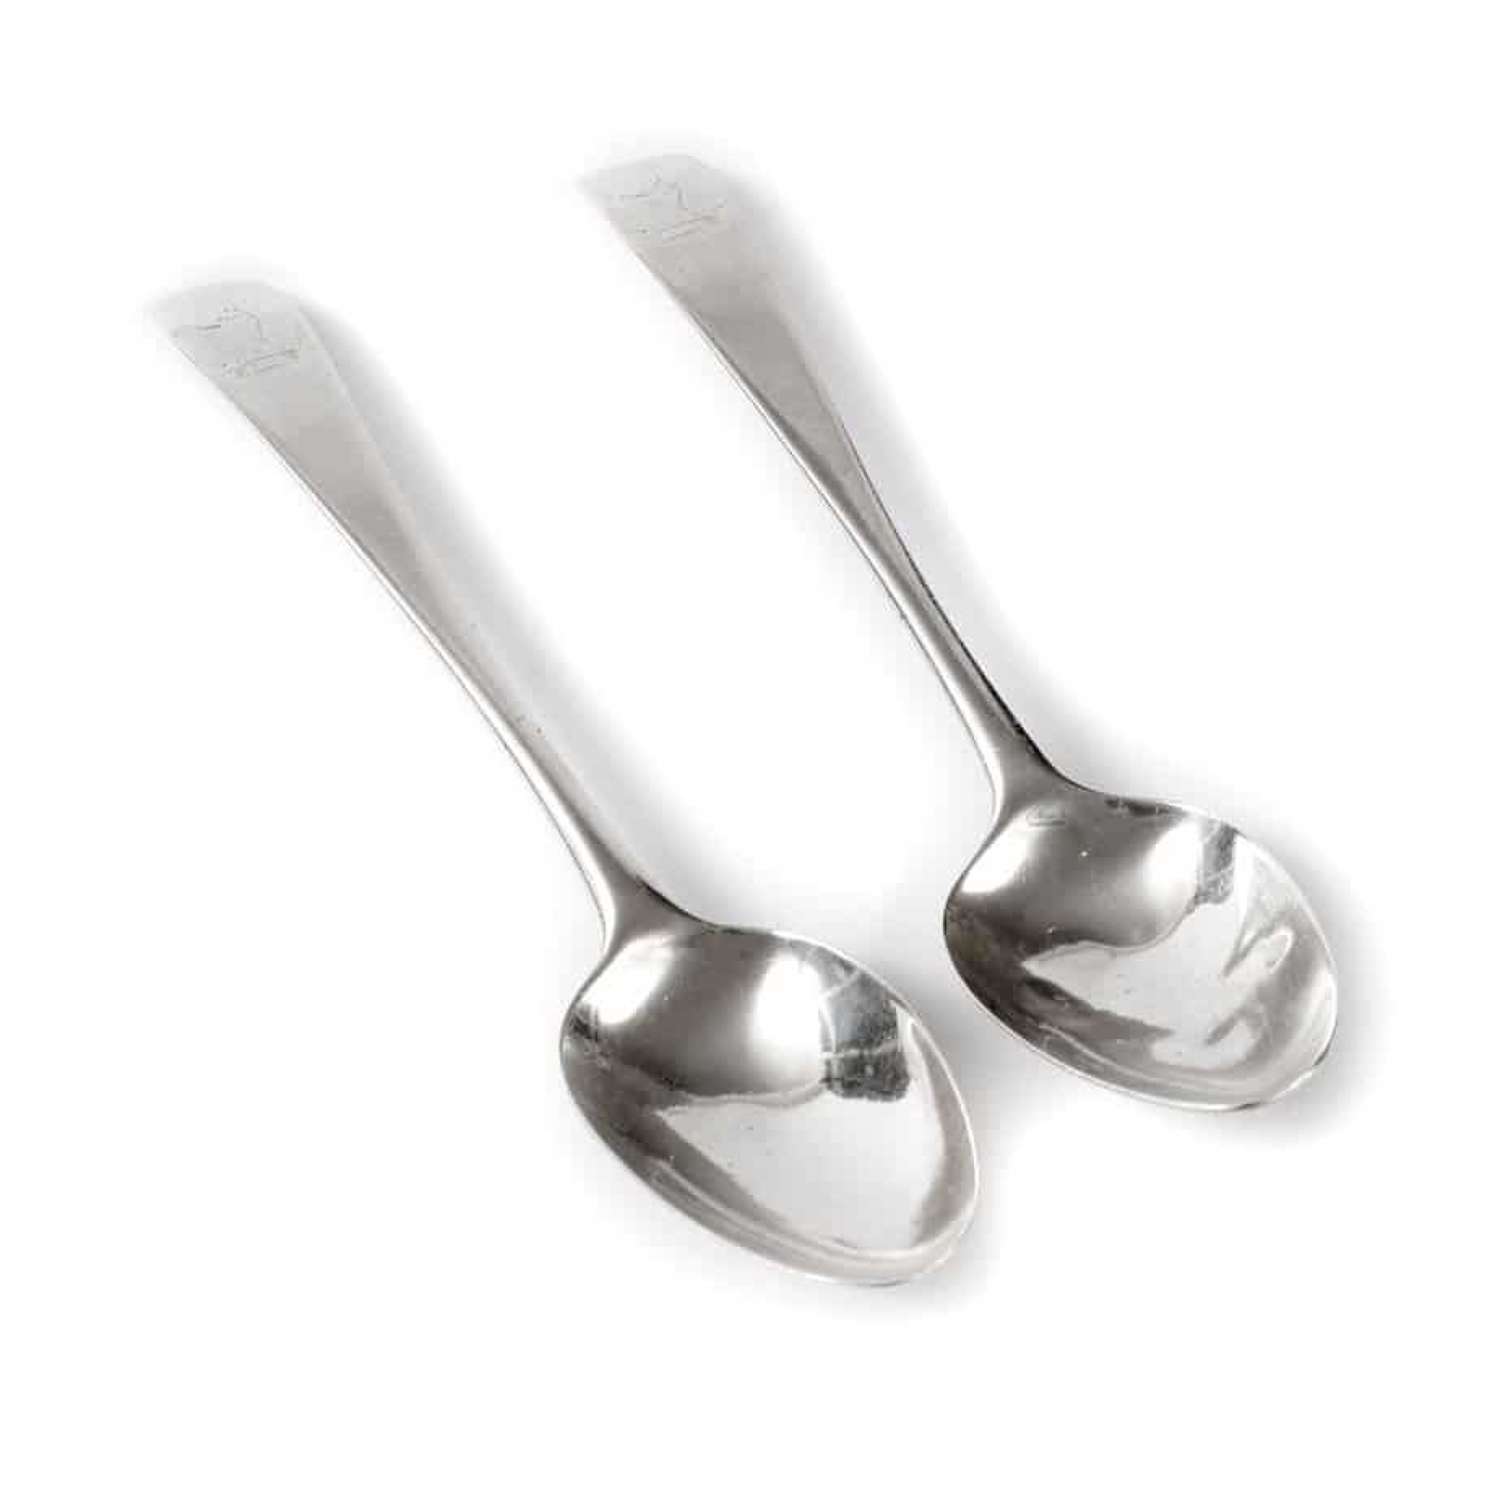 Pair of Irish silver Tudor pattern spoons - by Michael Keating